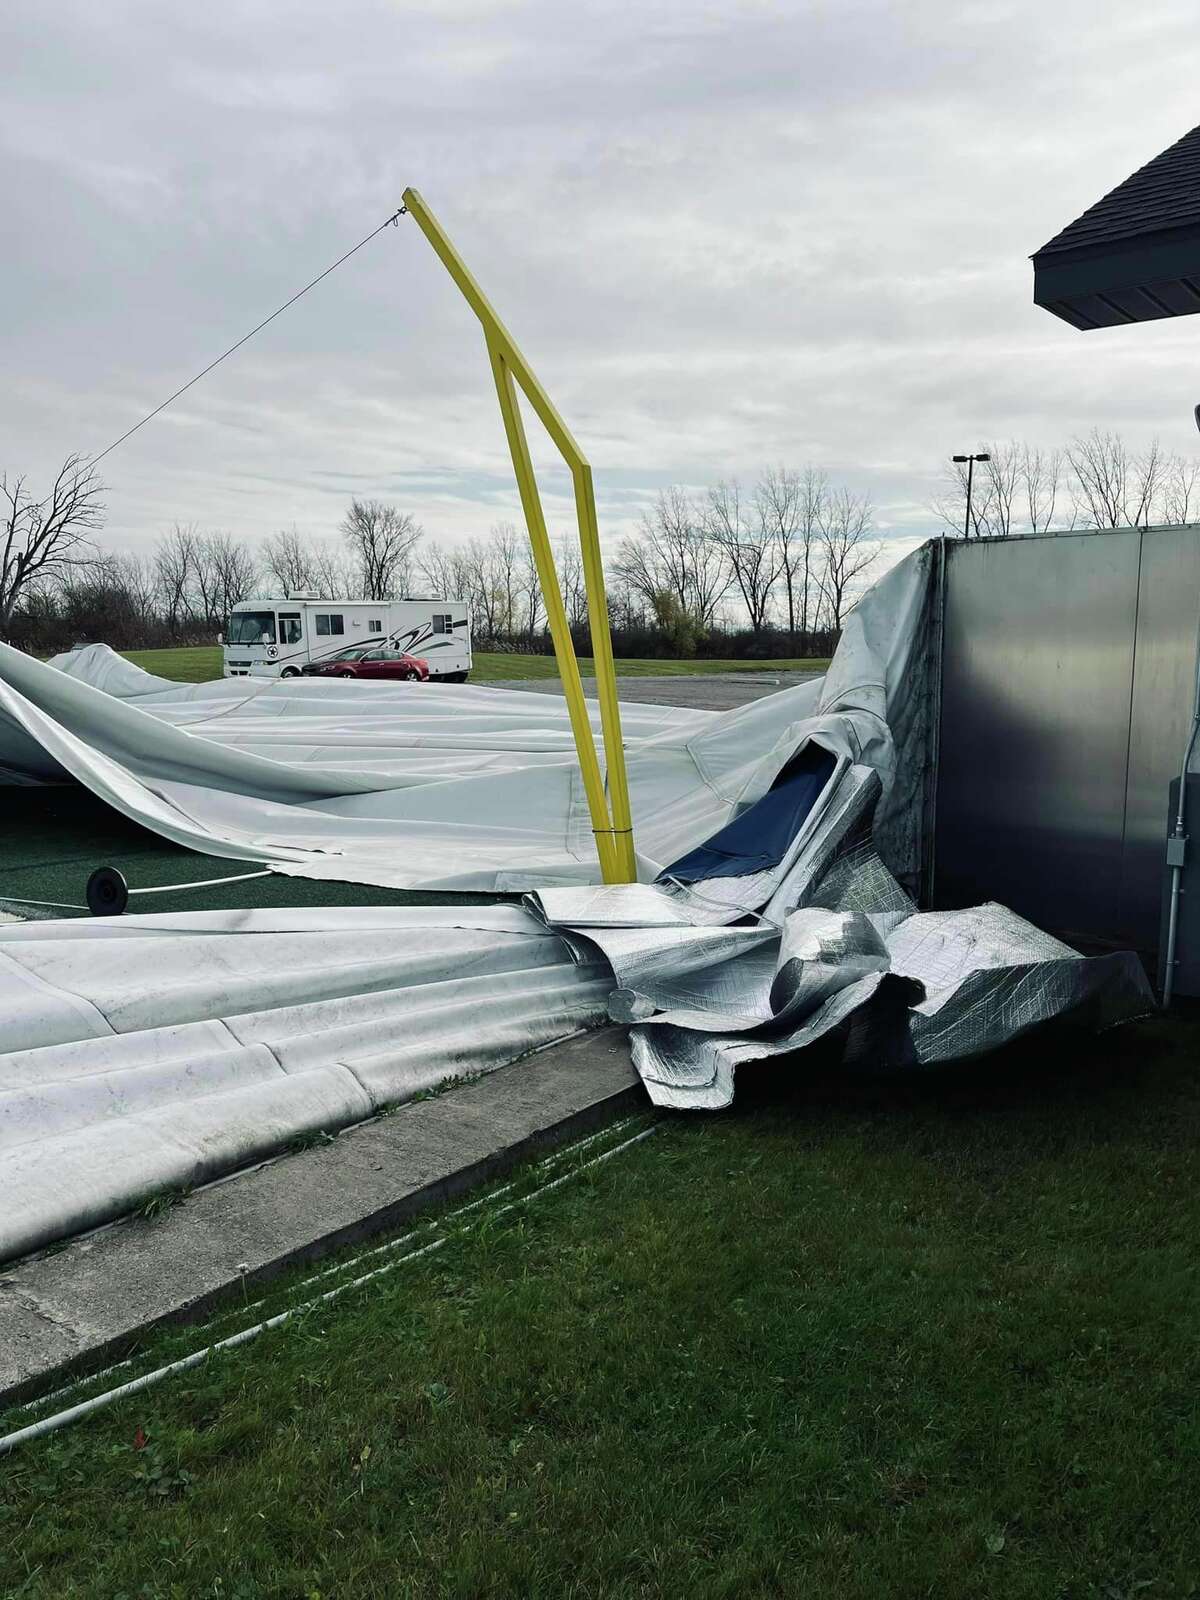 Tri-City Sports Complex in Auburn, Michigan, collapses in wind storm